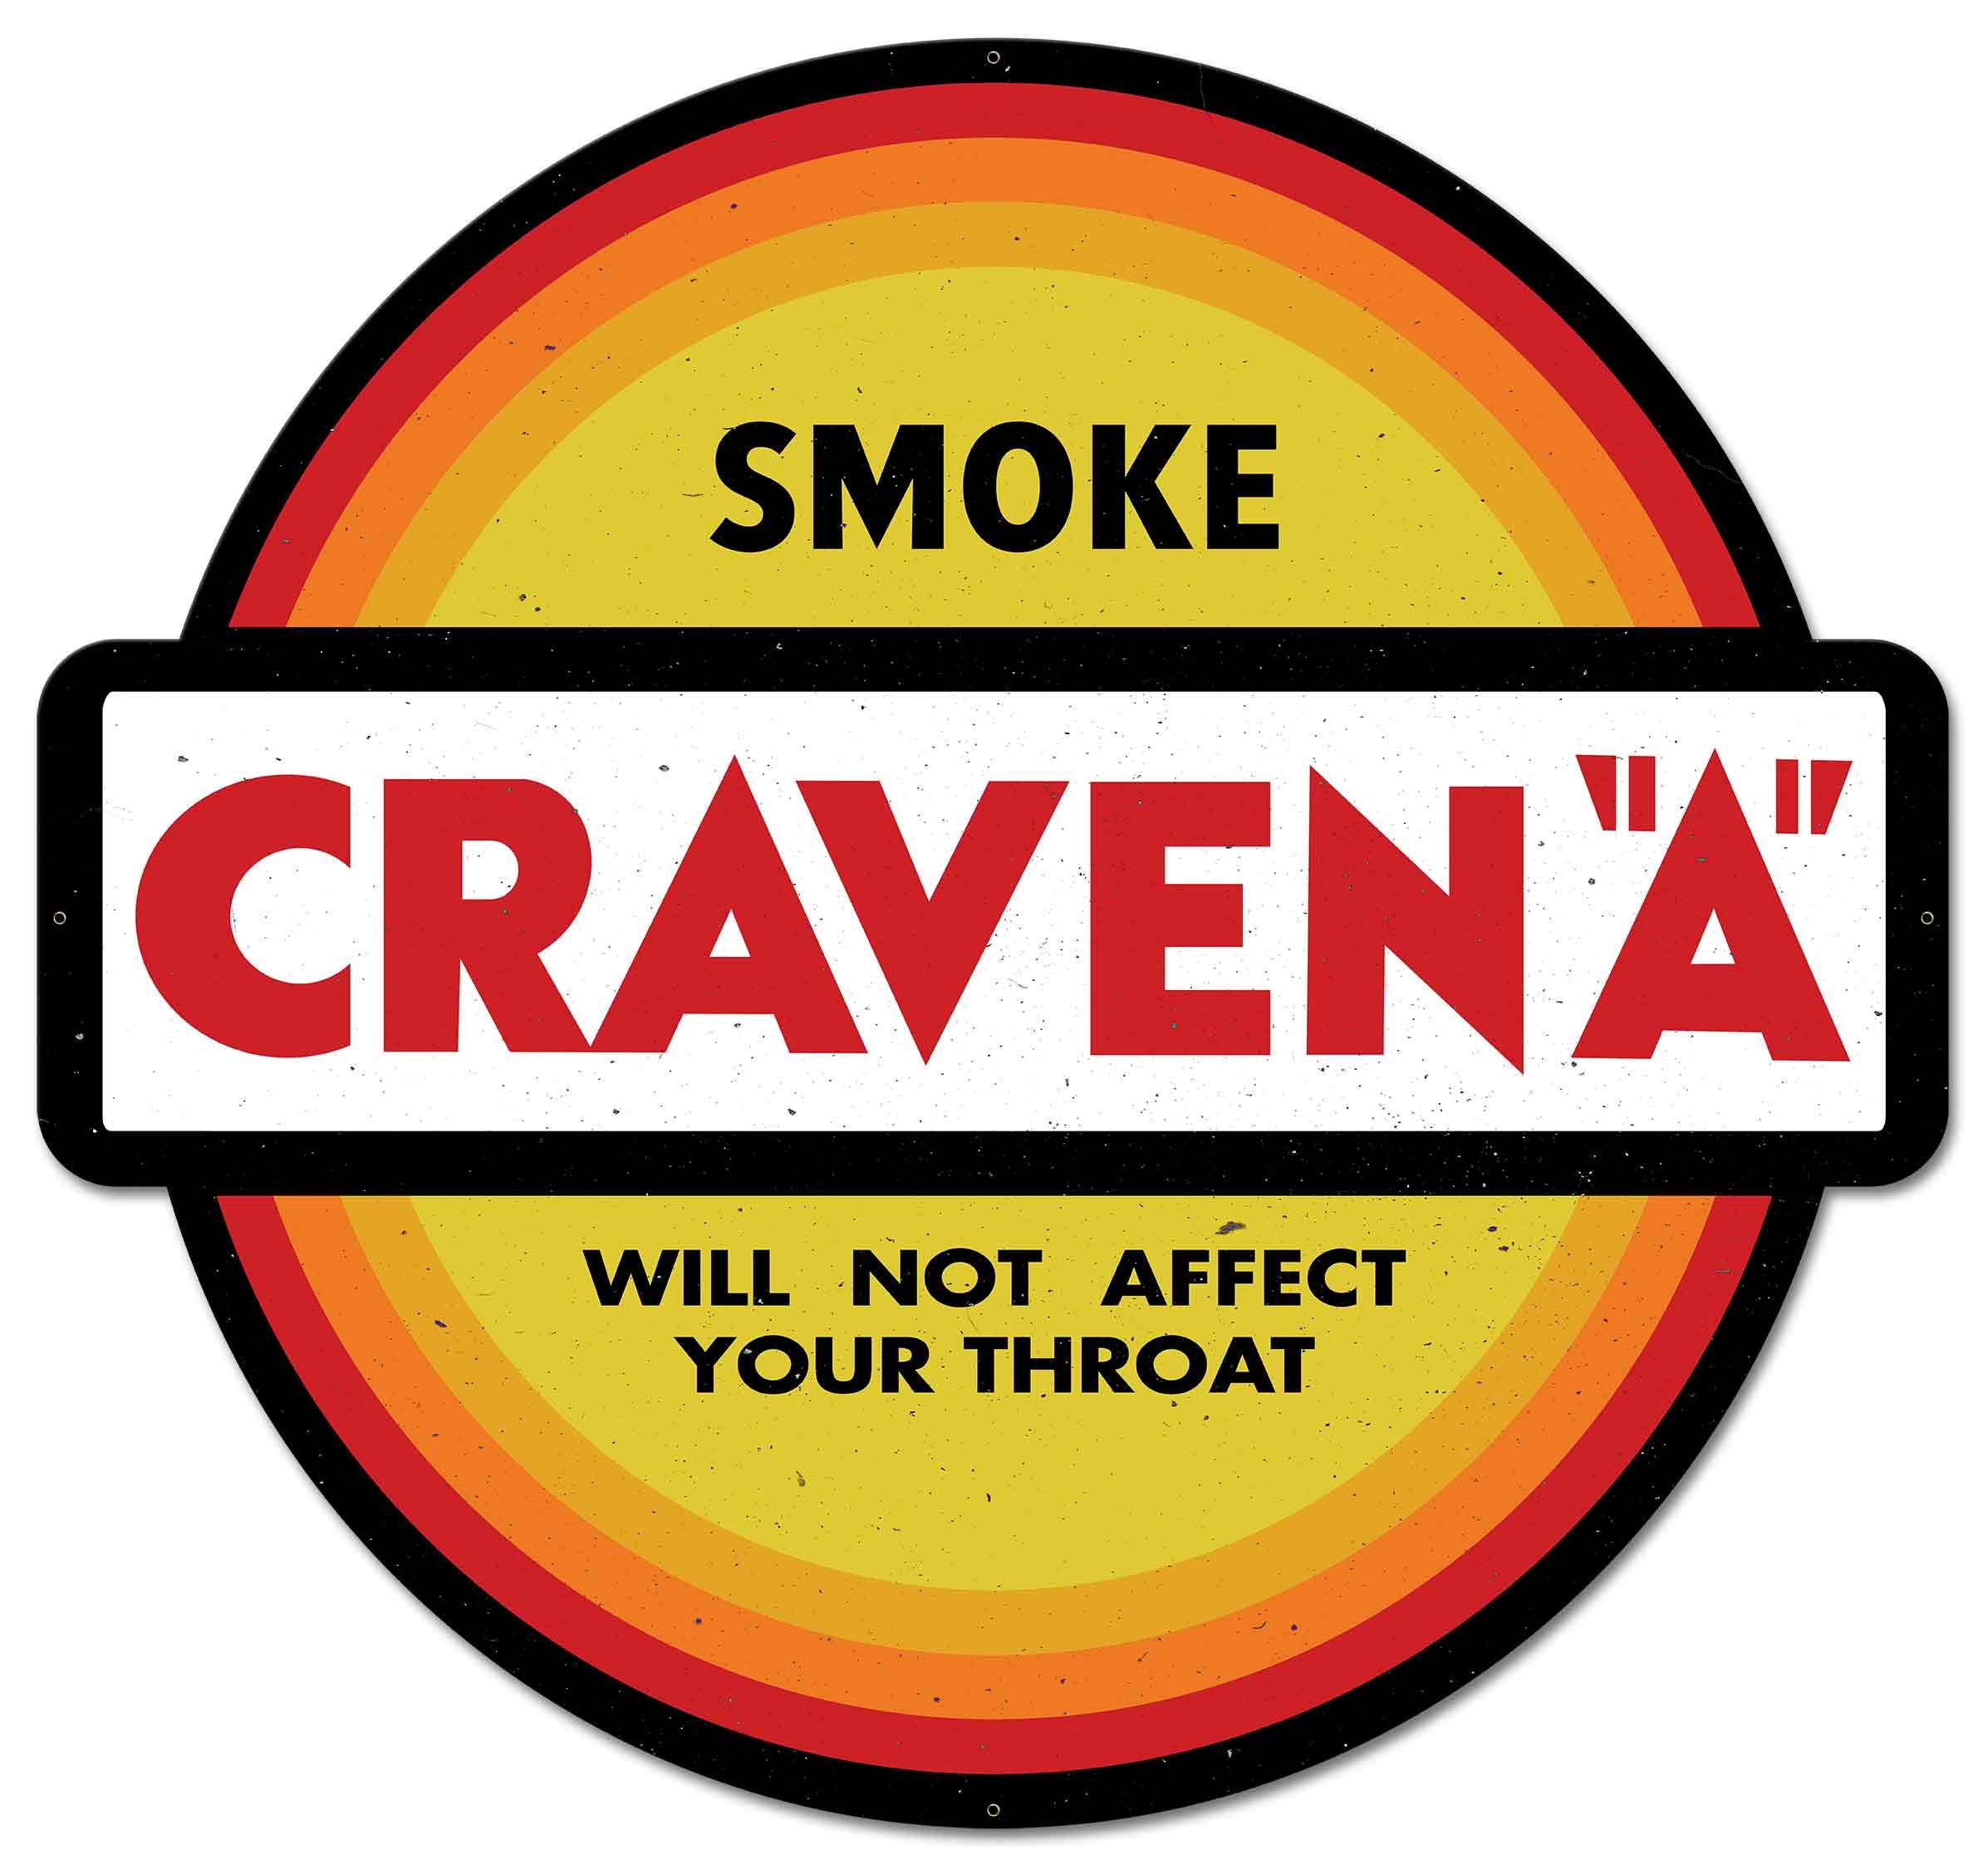 Craven "A" Cigarette Sign